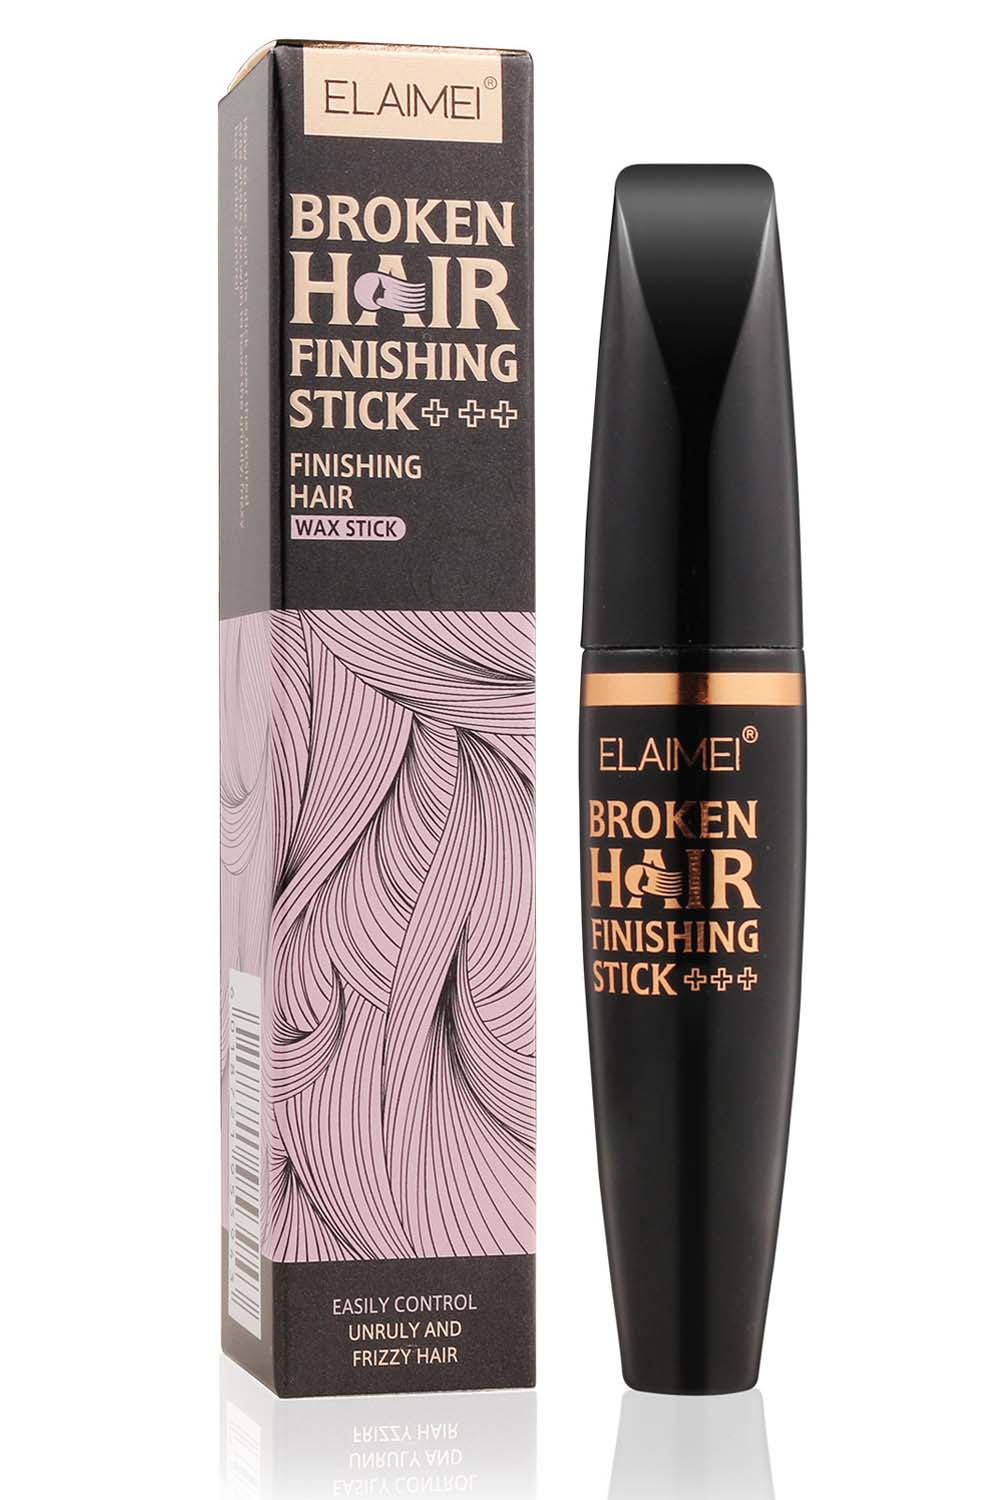 hair-finishing-stick-small-broken-hair-cream-bangs-styling-gel-1